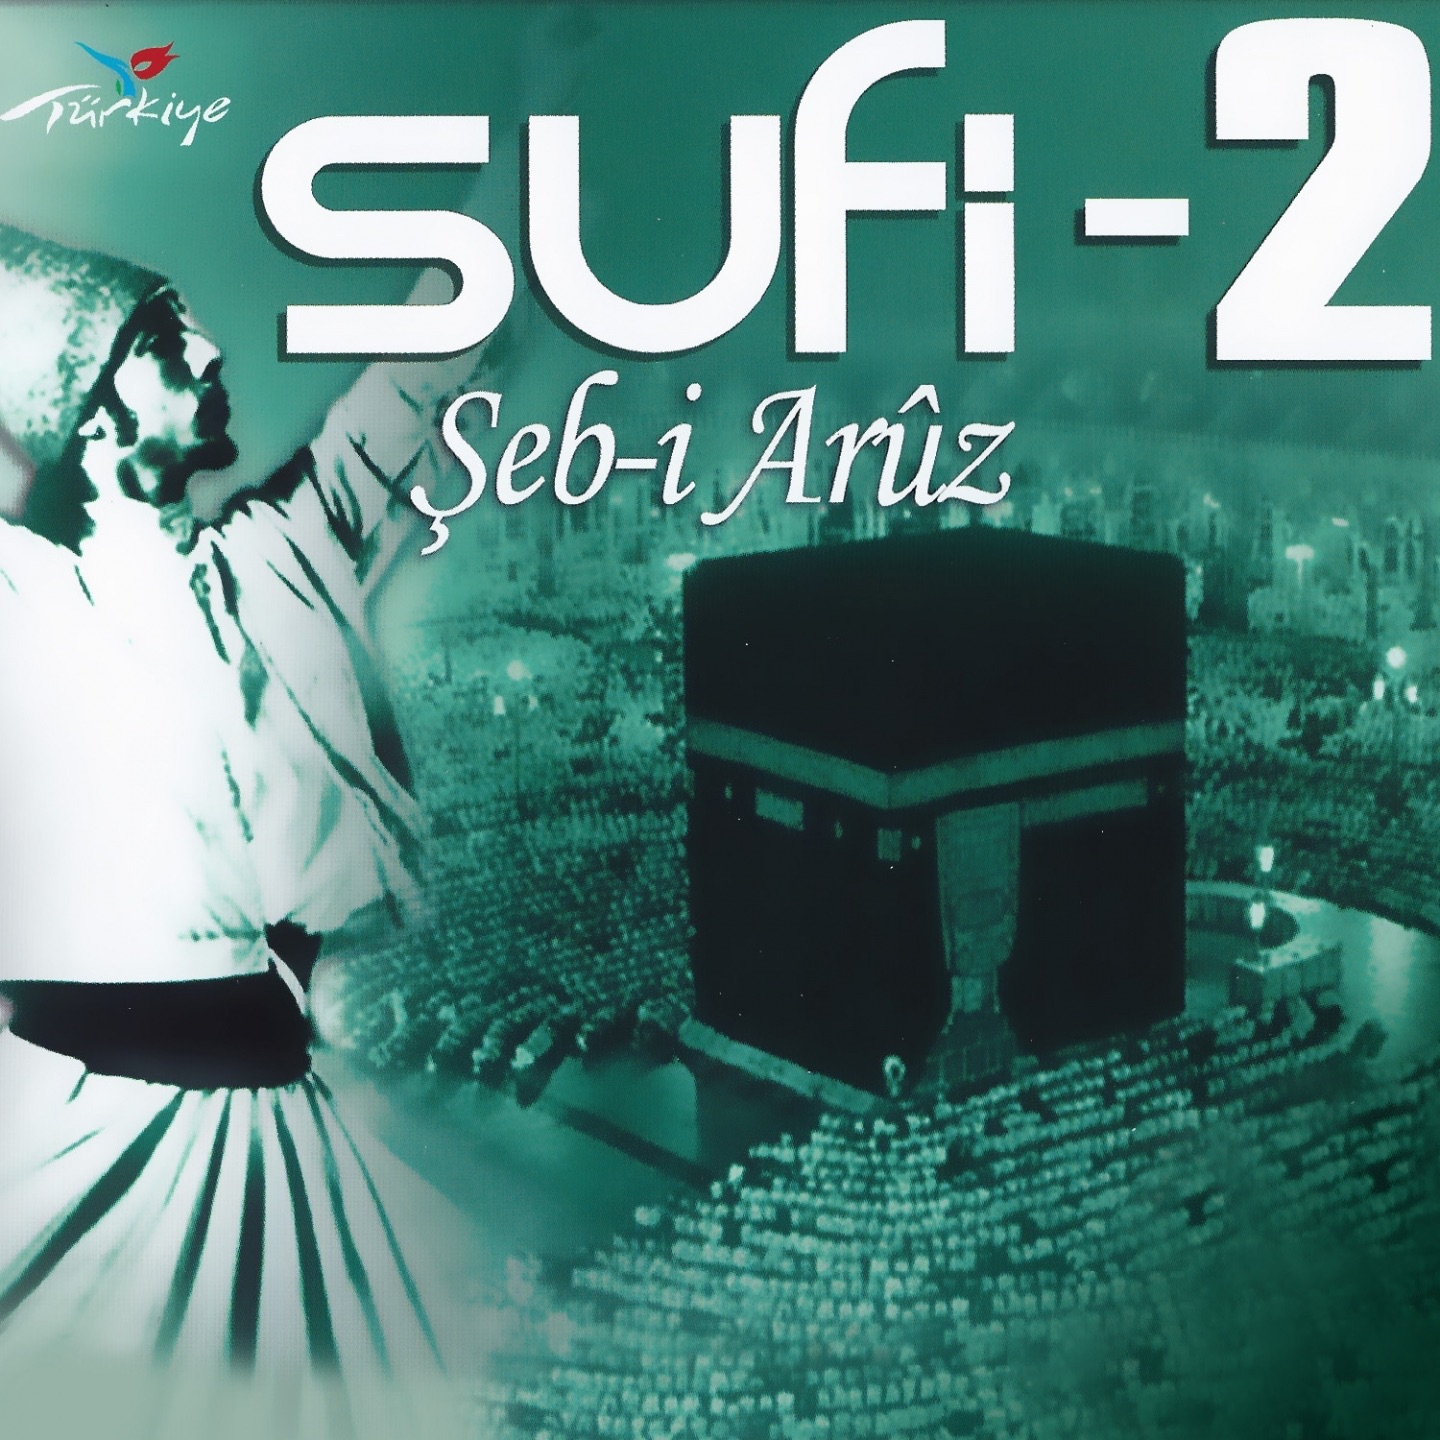 Sufi Songs Mp3 Free Downloads